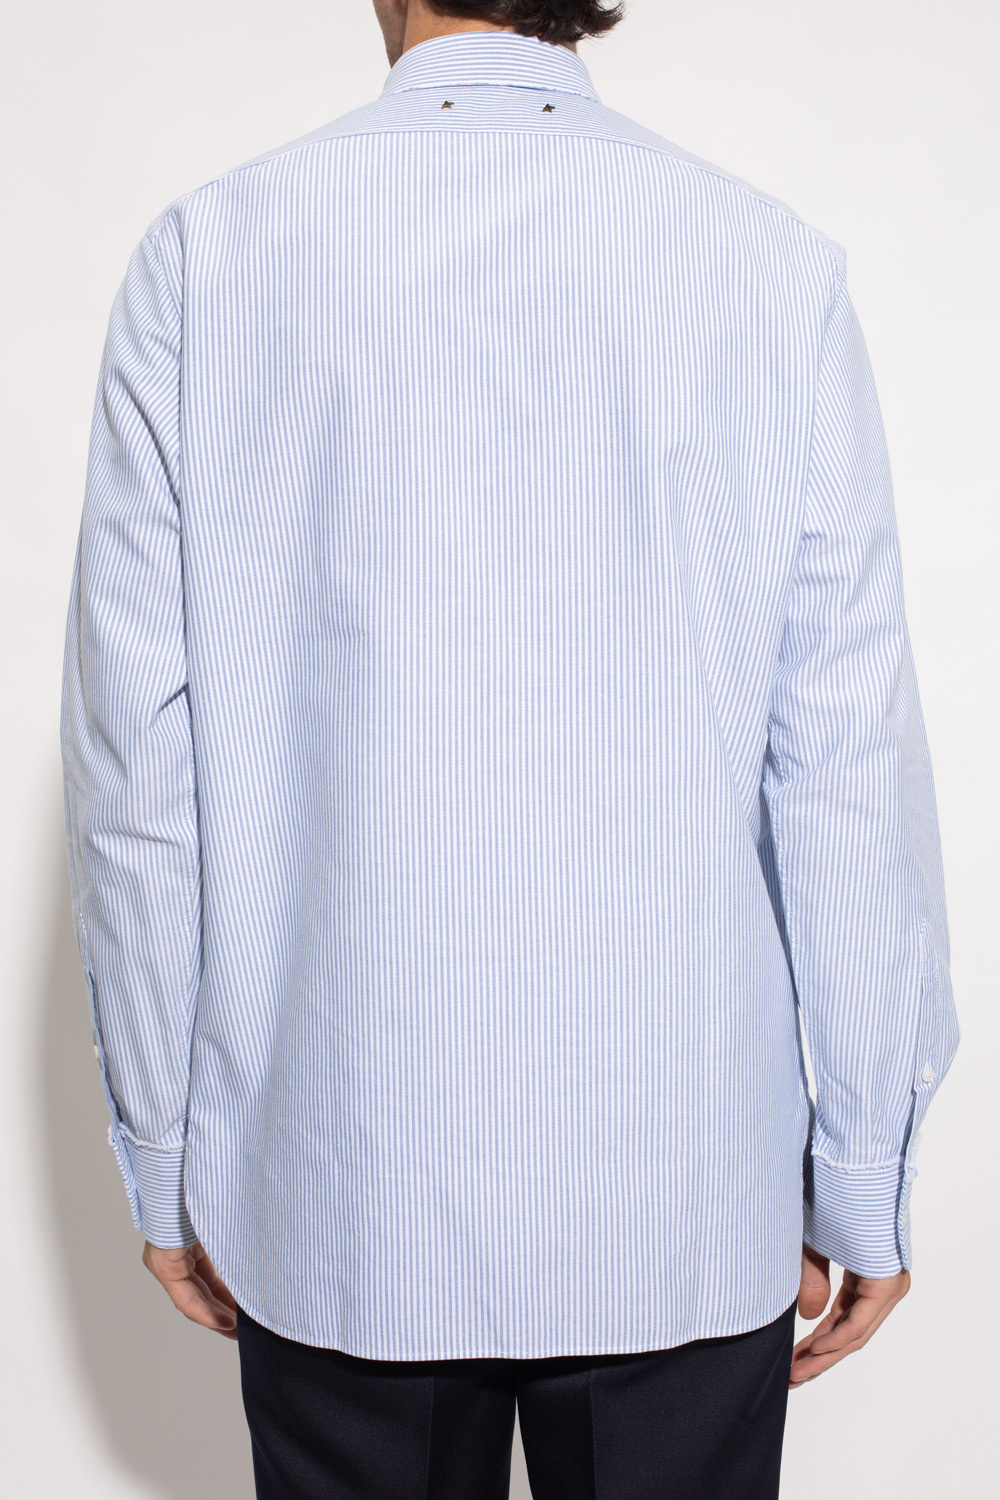 Golden Goose Striped shirt | Men's Clothing | Vitkac